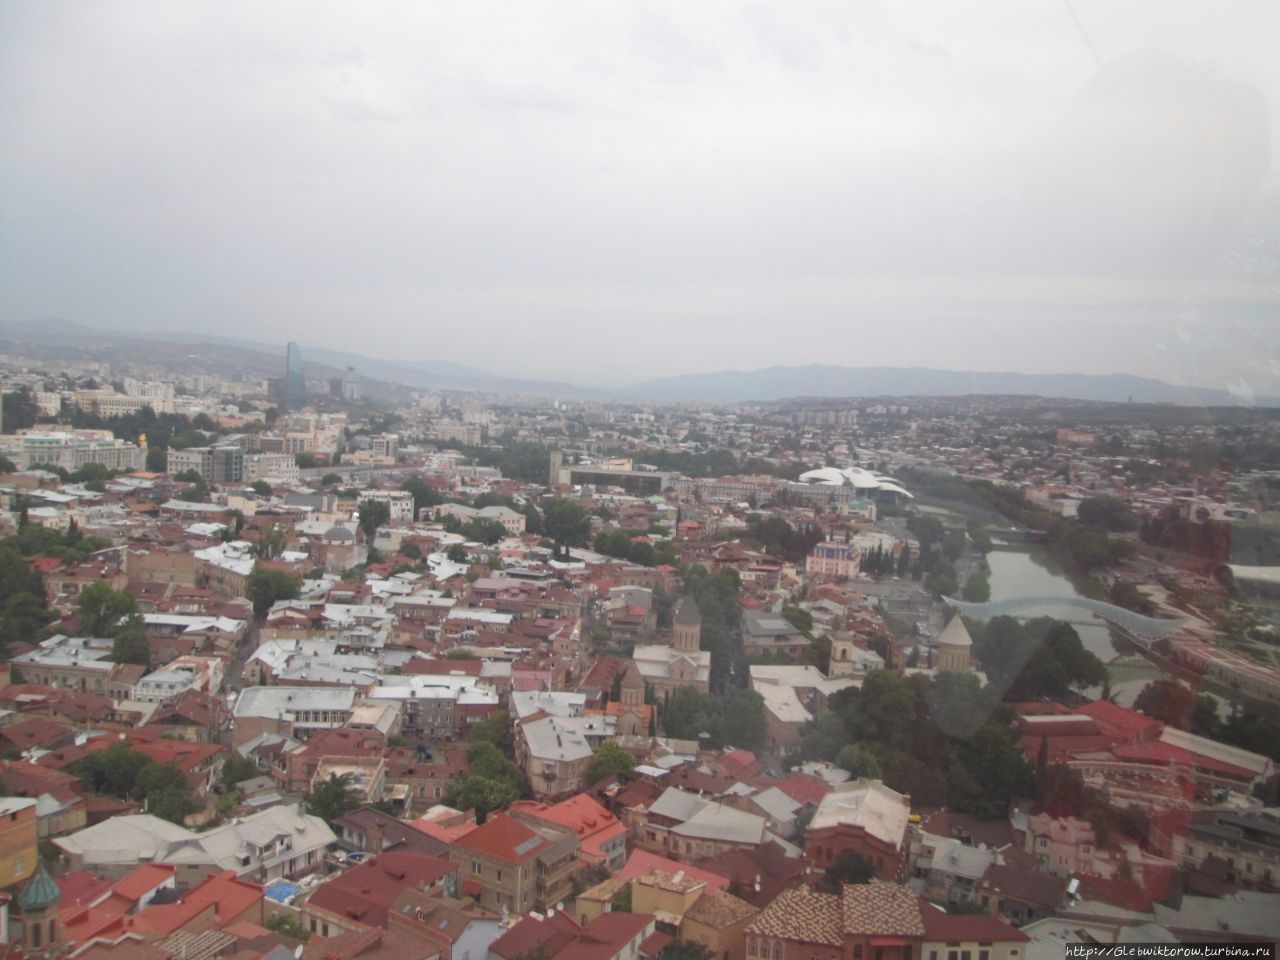 Канатная дорога от парка Европы до крепости  Нарикала Тбилиси, Грузия